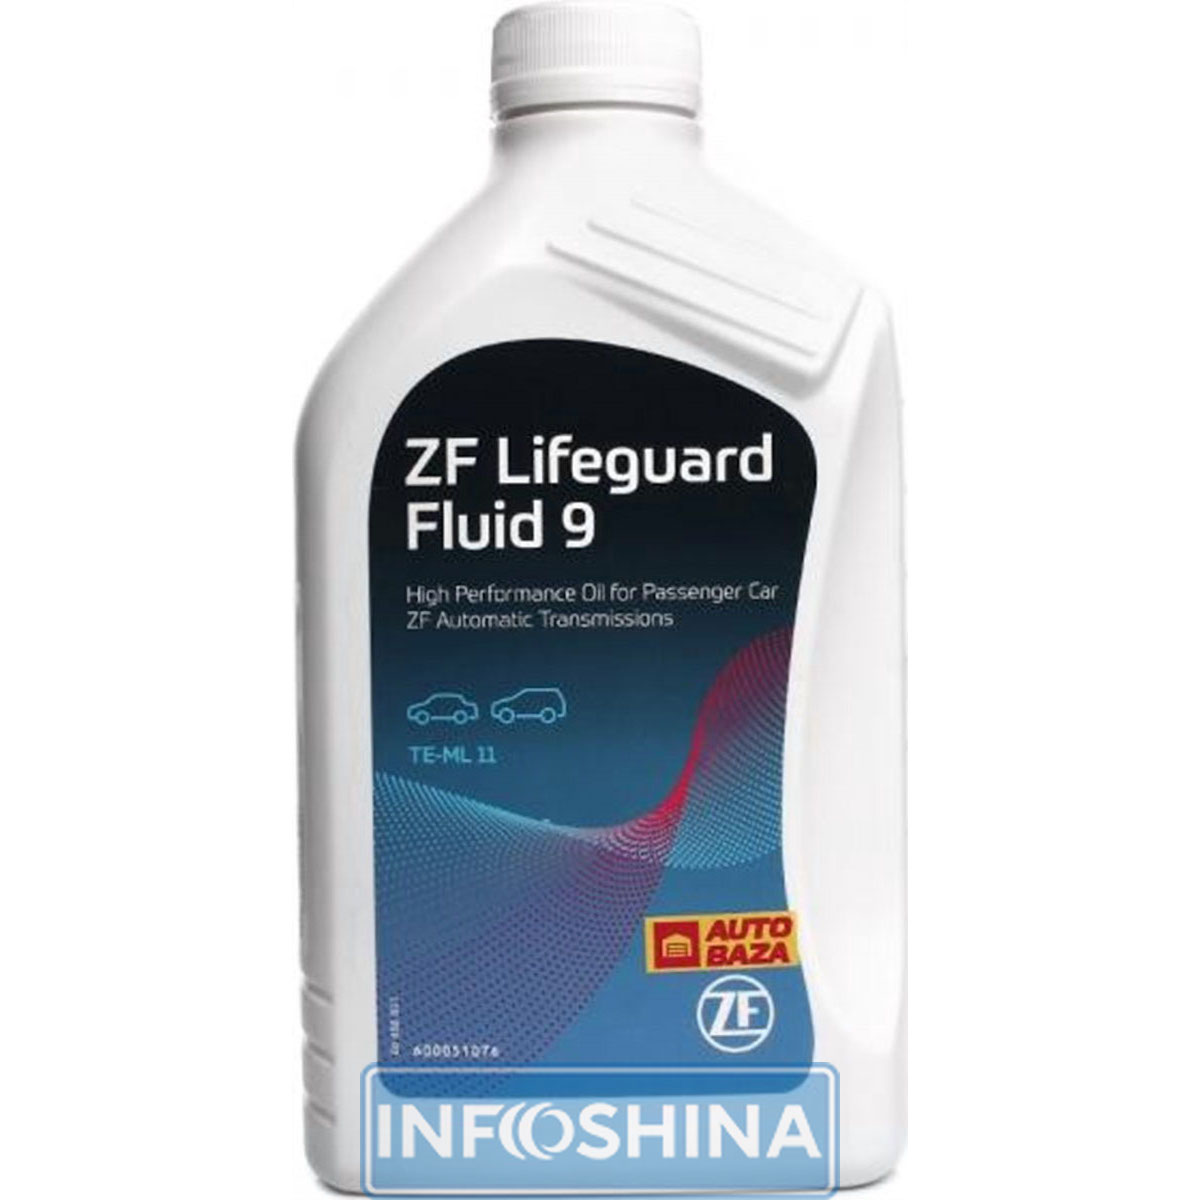 ZF LifeguardFluid 9